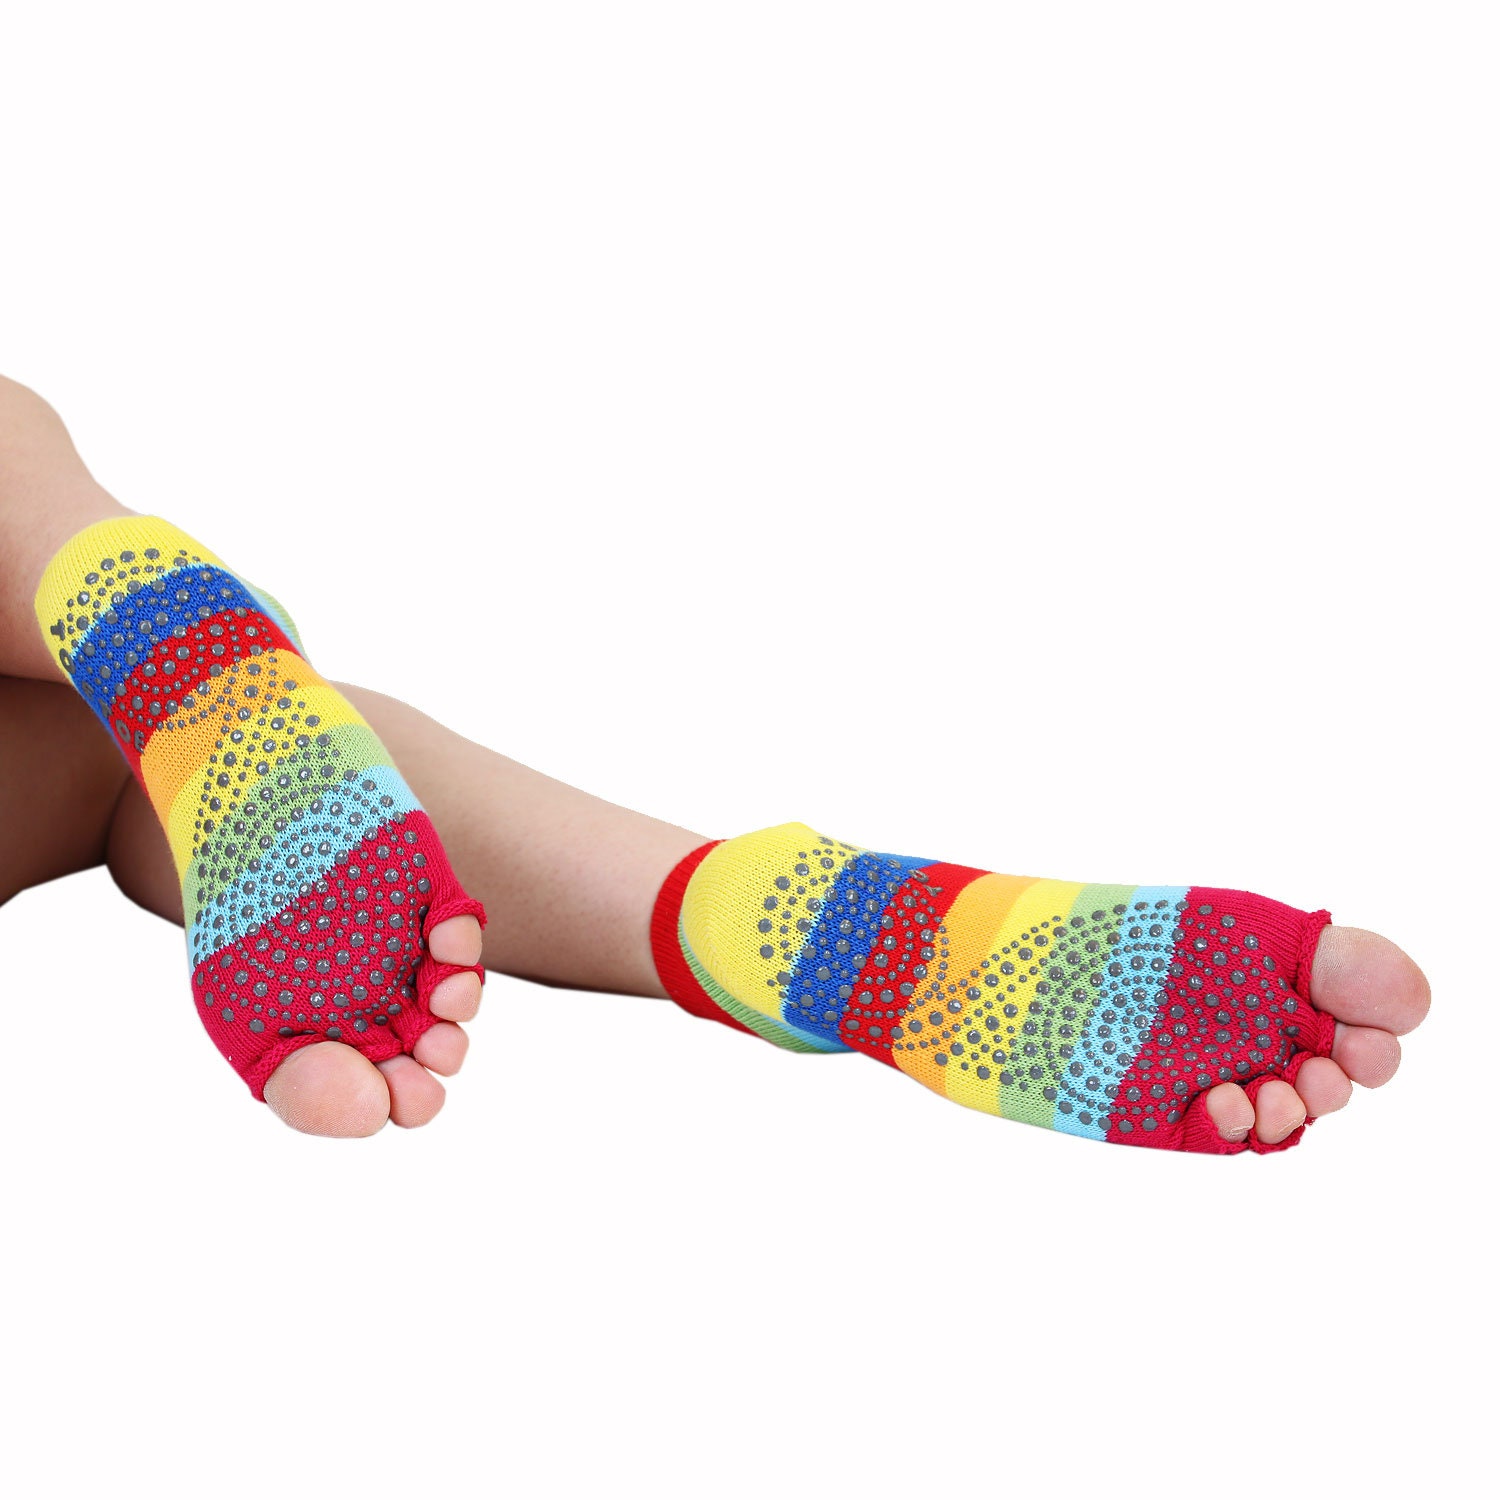 TOETOE® Socks - Anti-Slip Sole Open Toe Half Toe Socks Turquoise